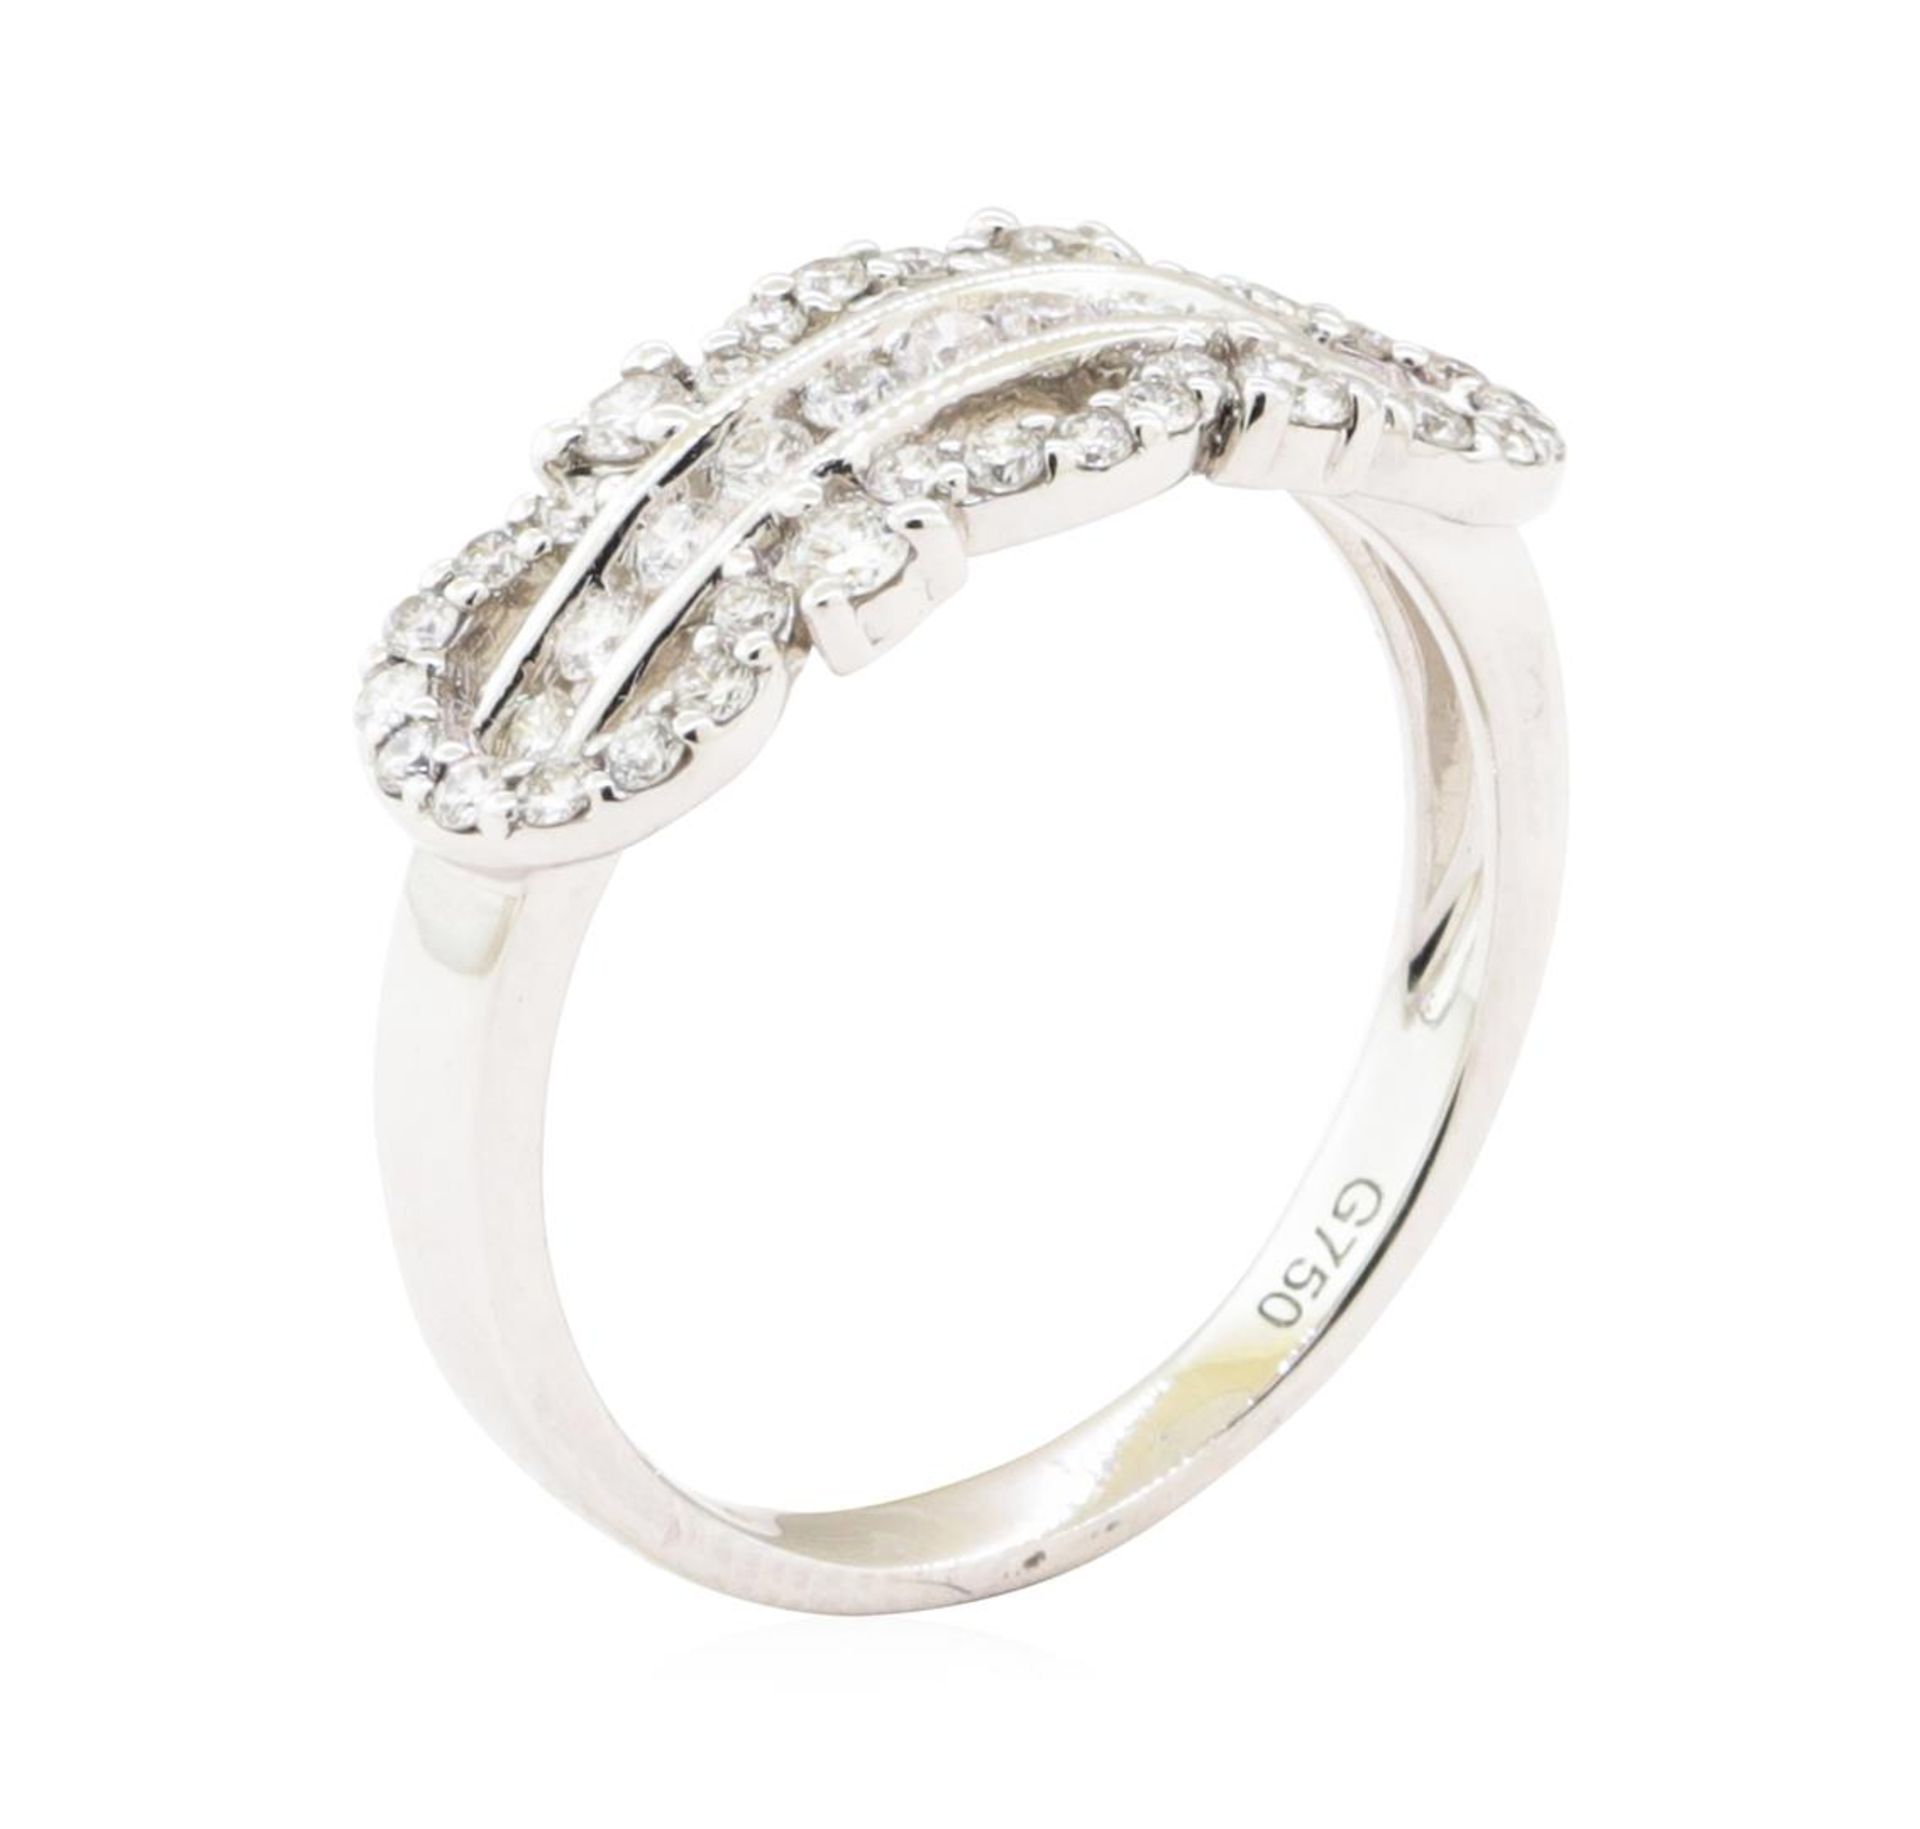 0.54 ctw Diamond Ring - 18KT White Gold - Image 4 of 4